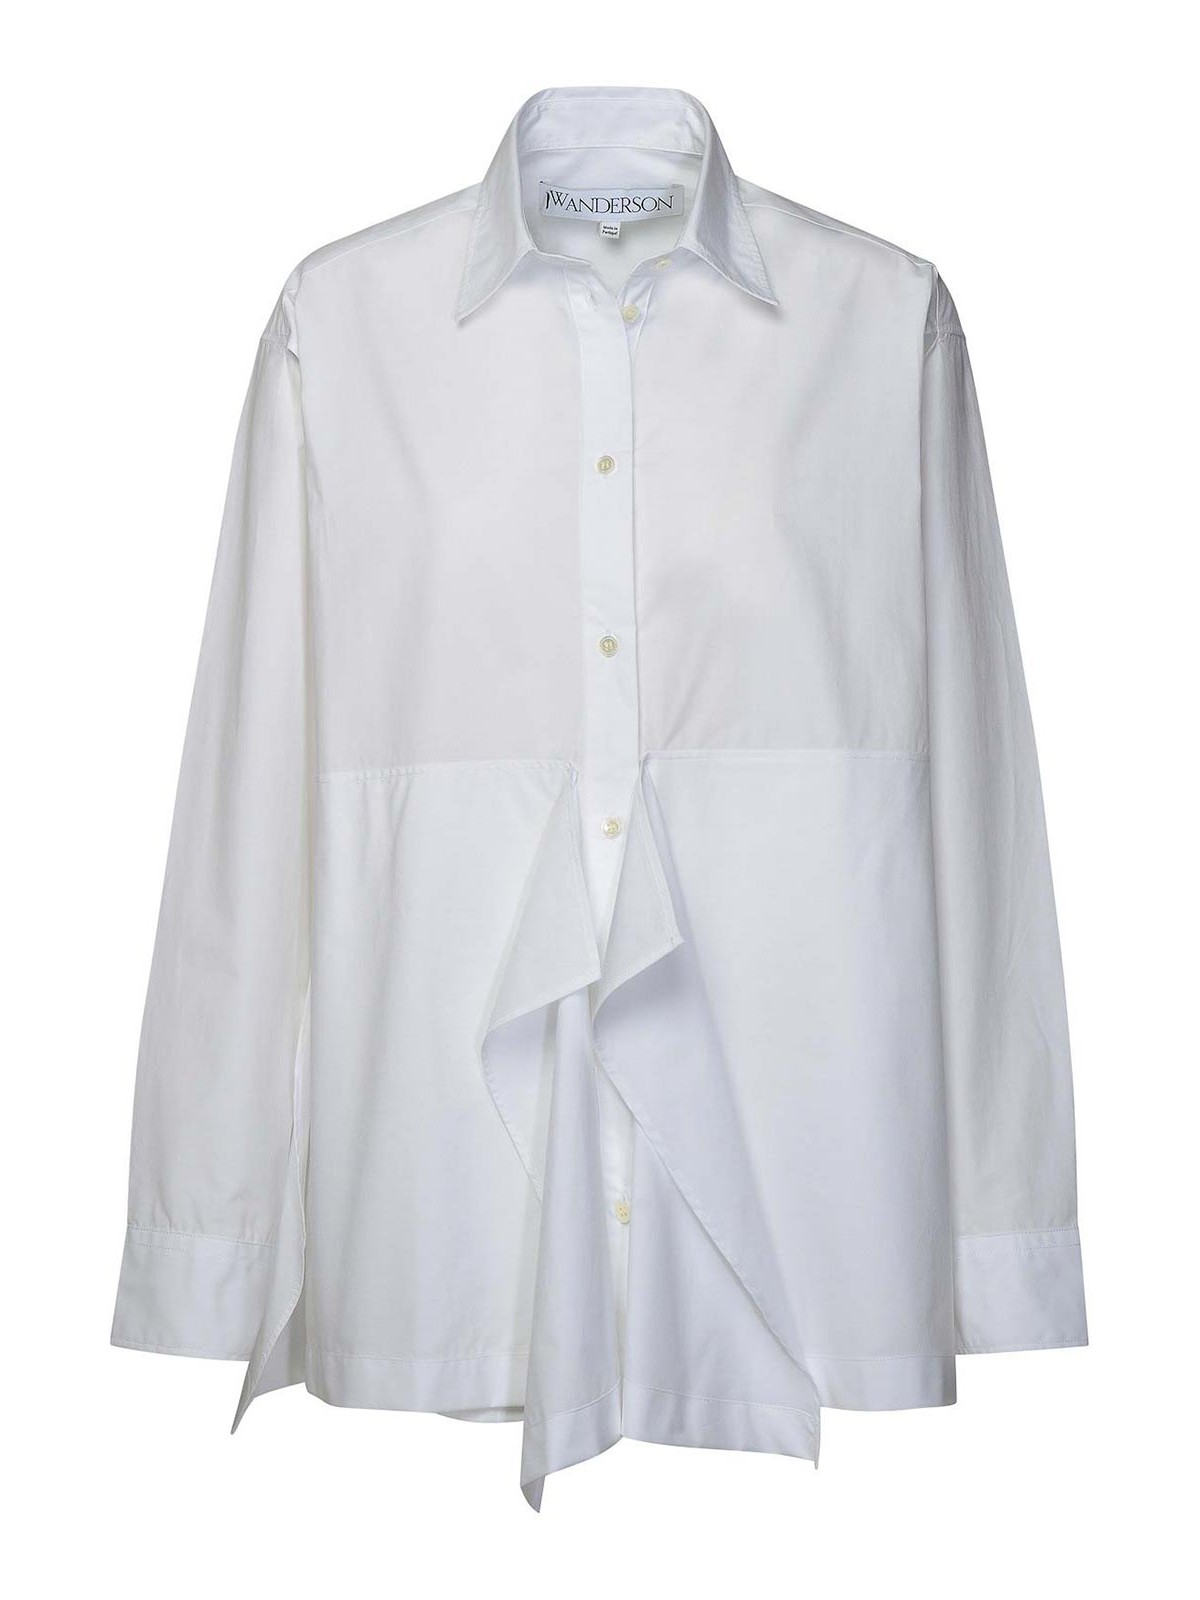 Shop Jw Anderson Peplum White Cotton Shirt